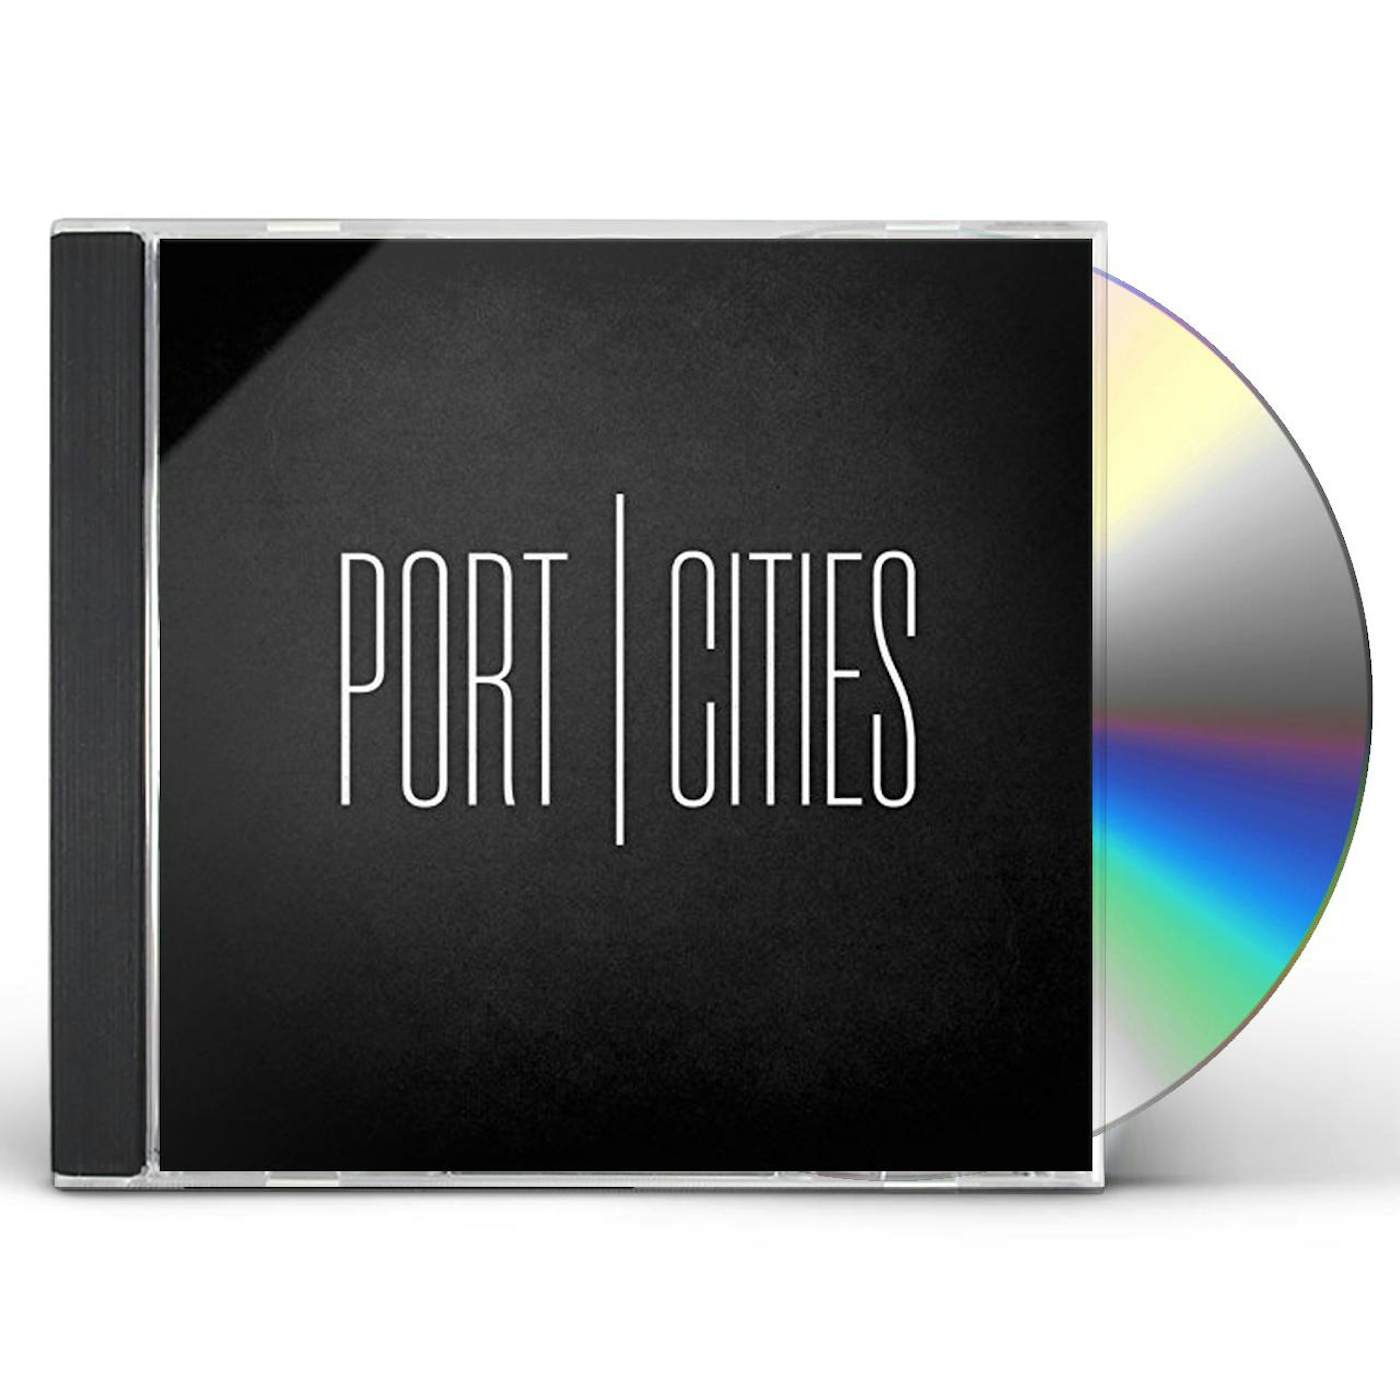 PORT CITIES CD